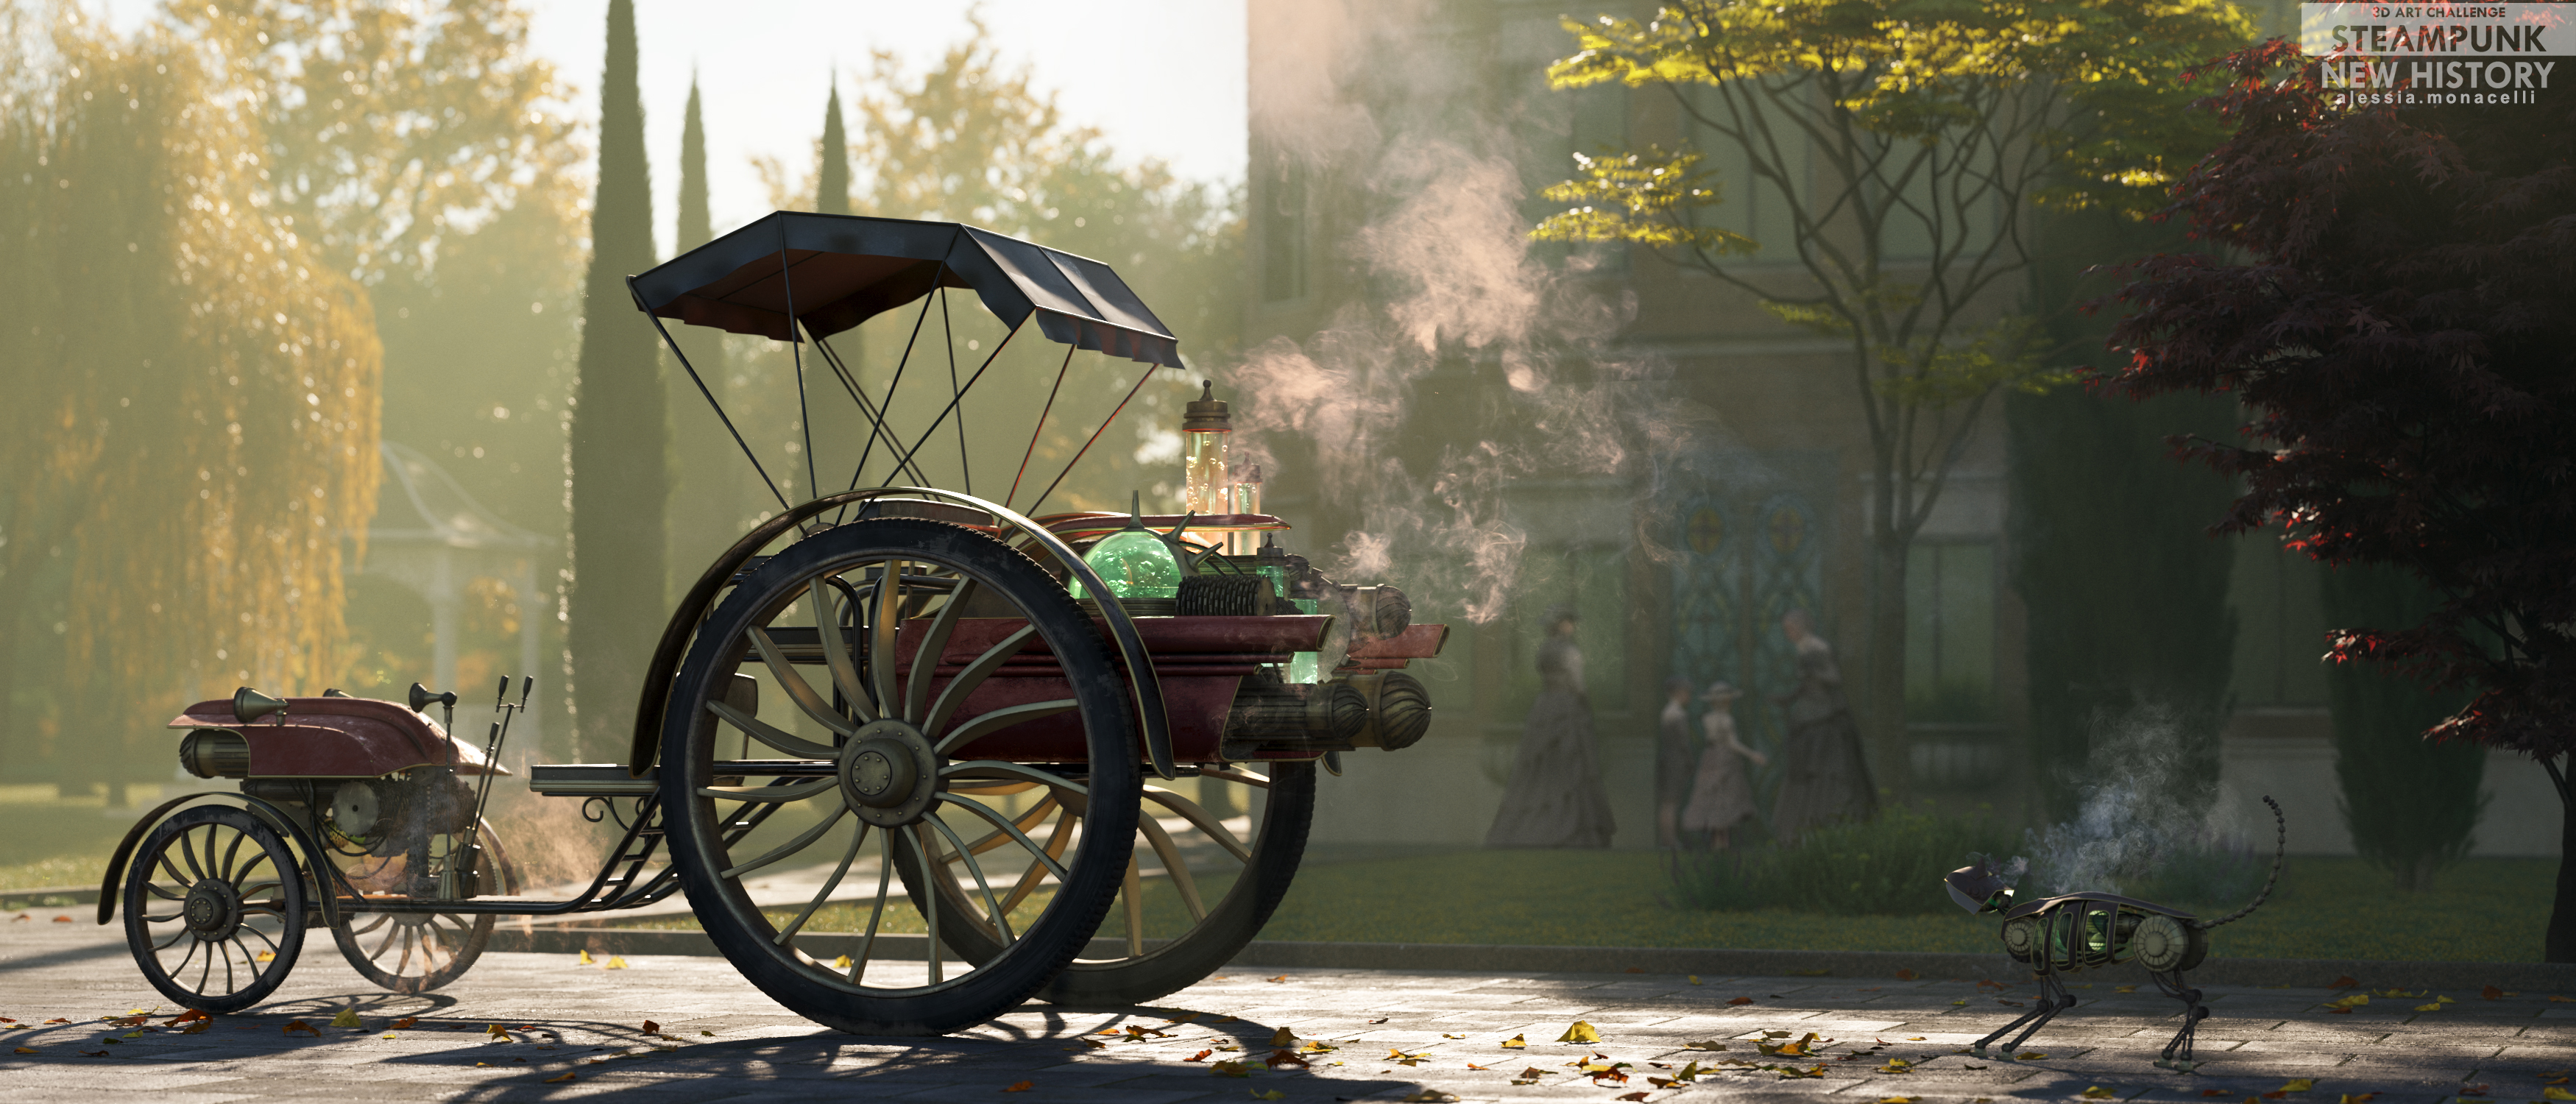 Steampunk: New History Challenge Winners The travel of Bertha Benz